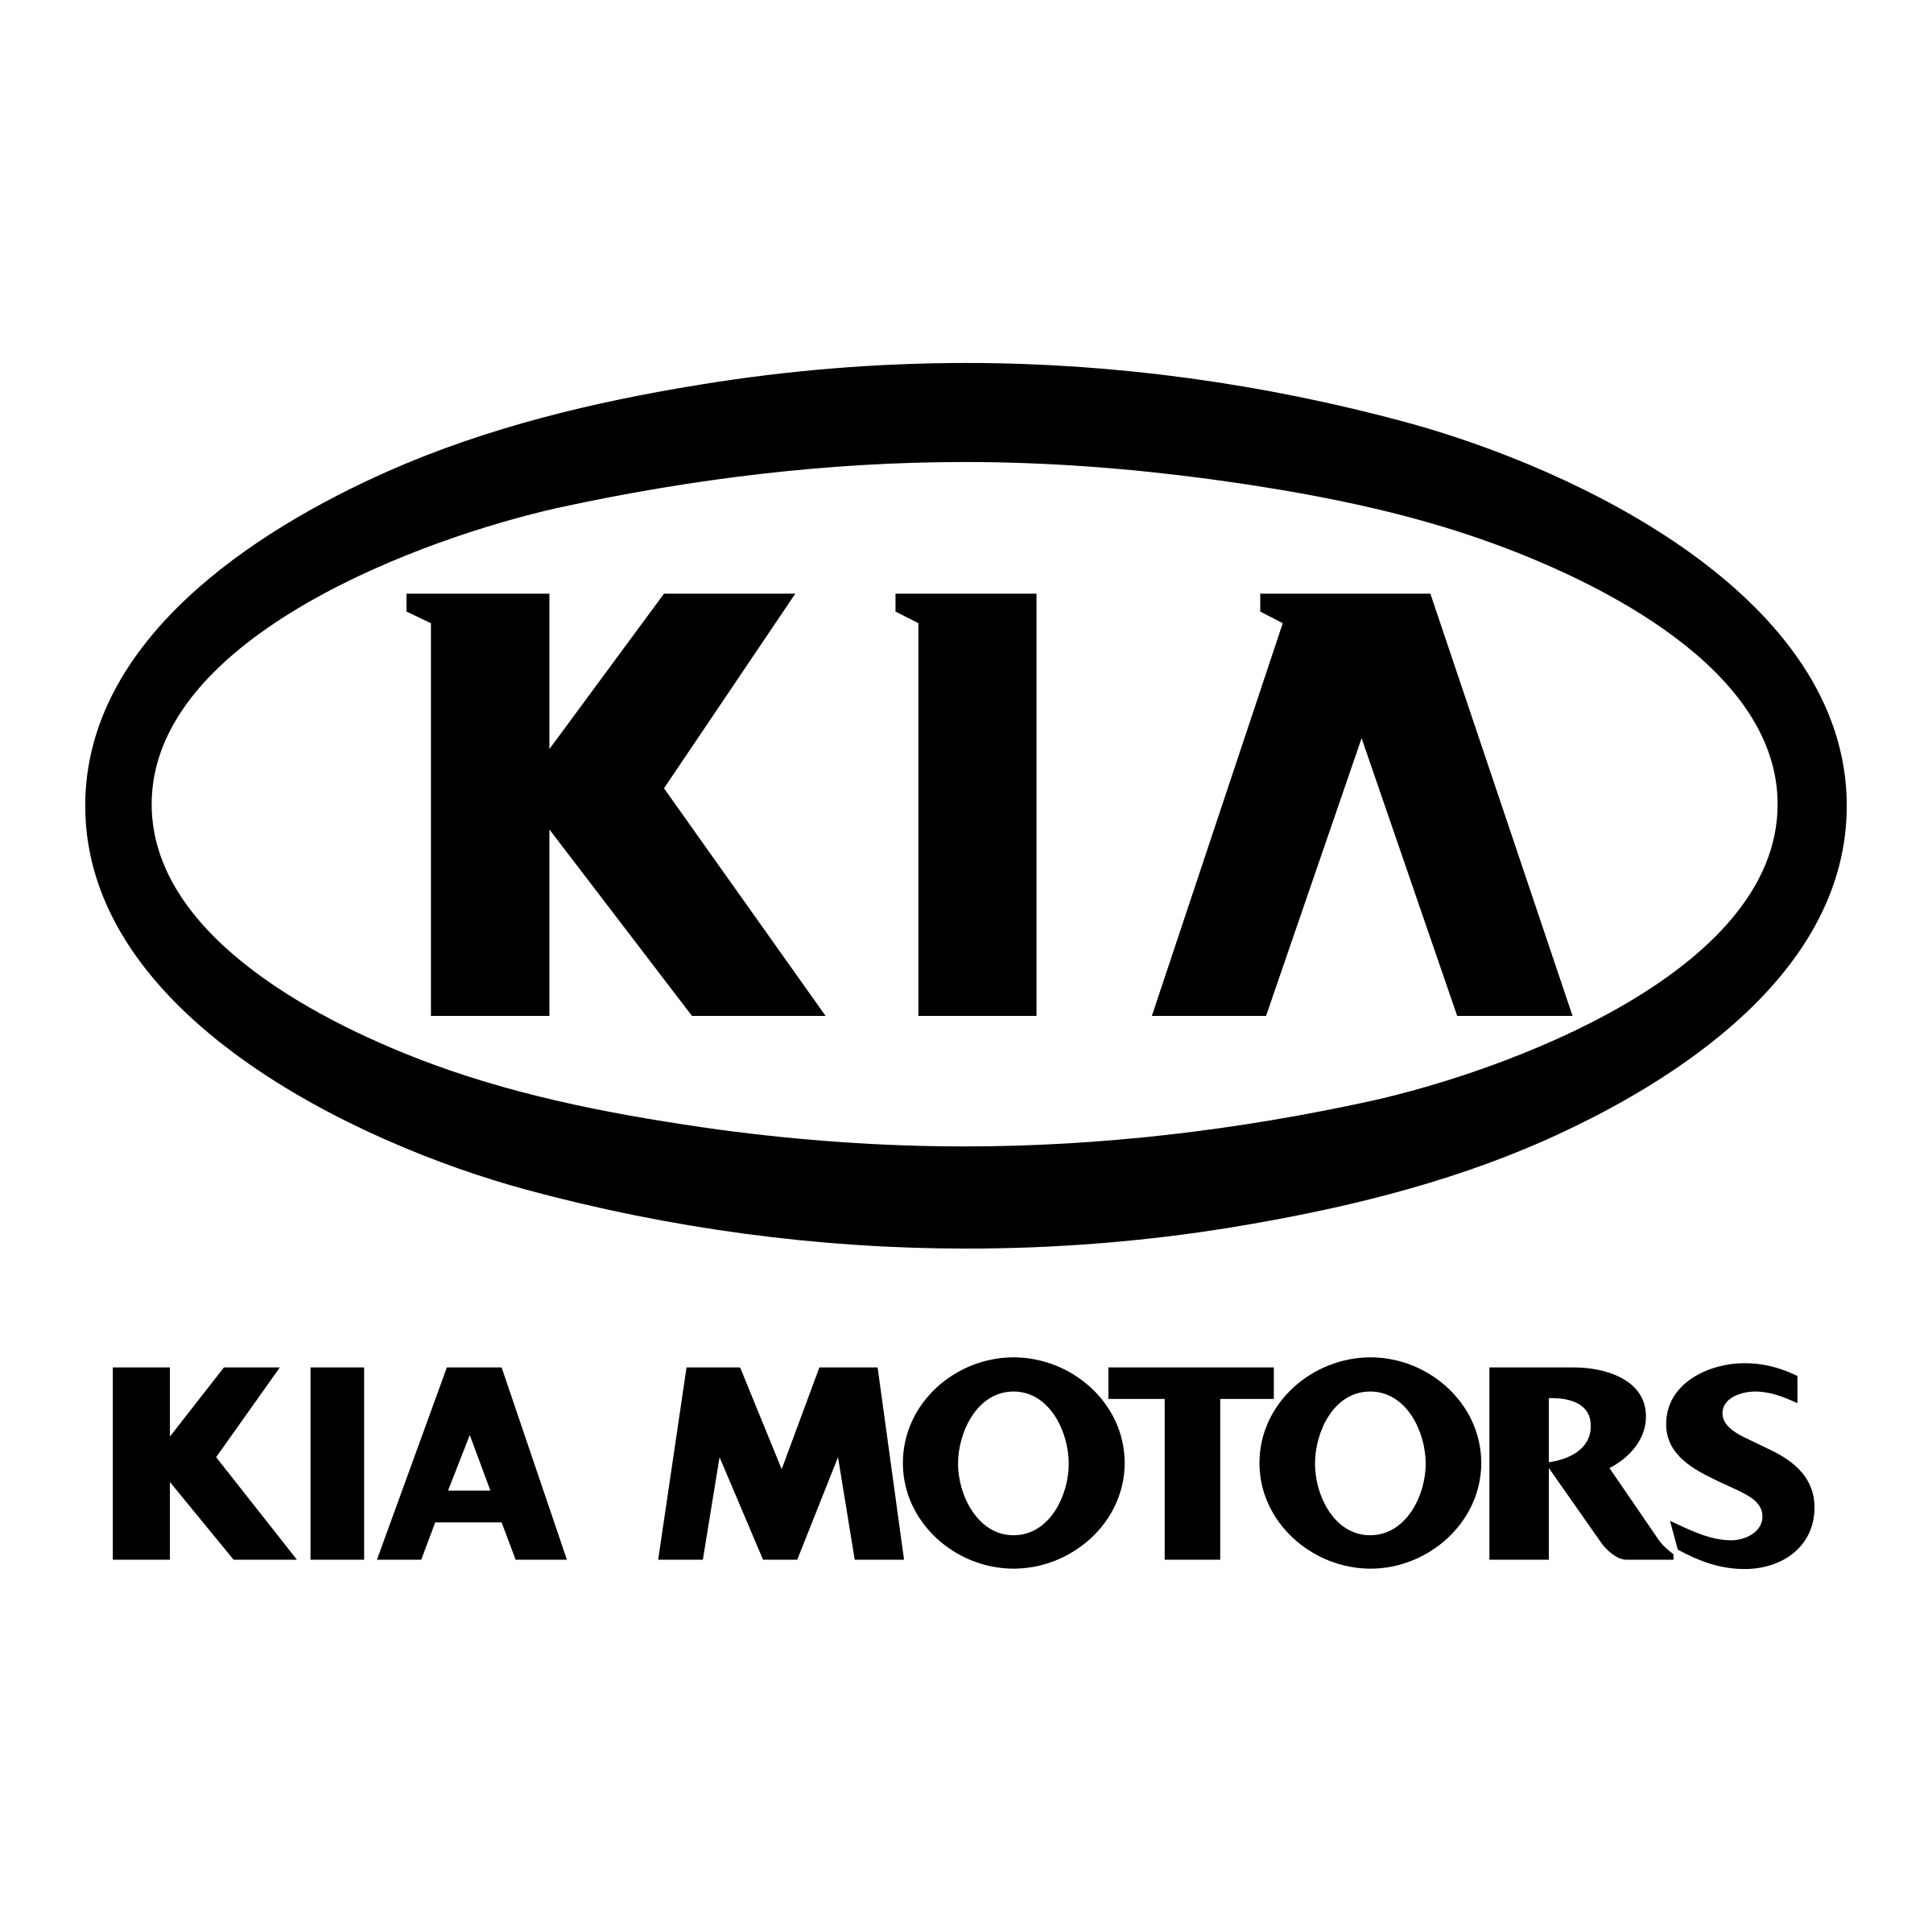 Black Kia Logo - Kia Motors Logo PNG Transparent & SVG Vector - Freebie Supply